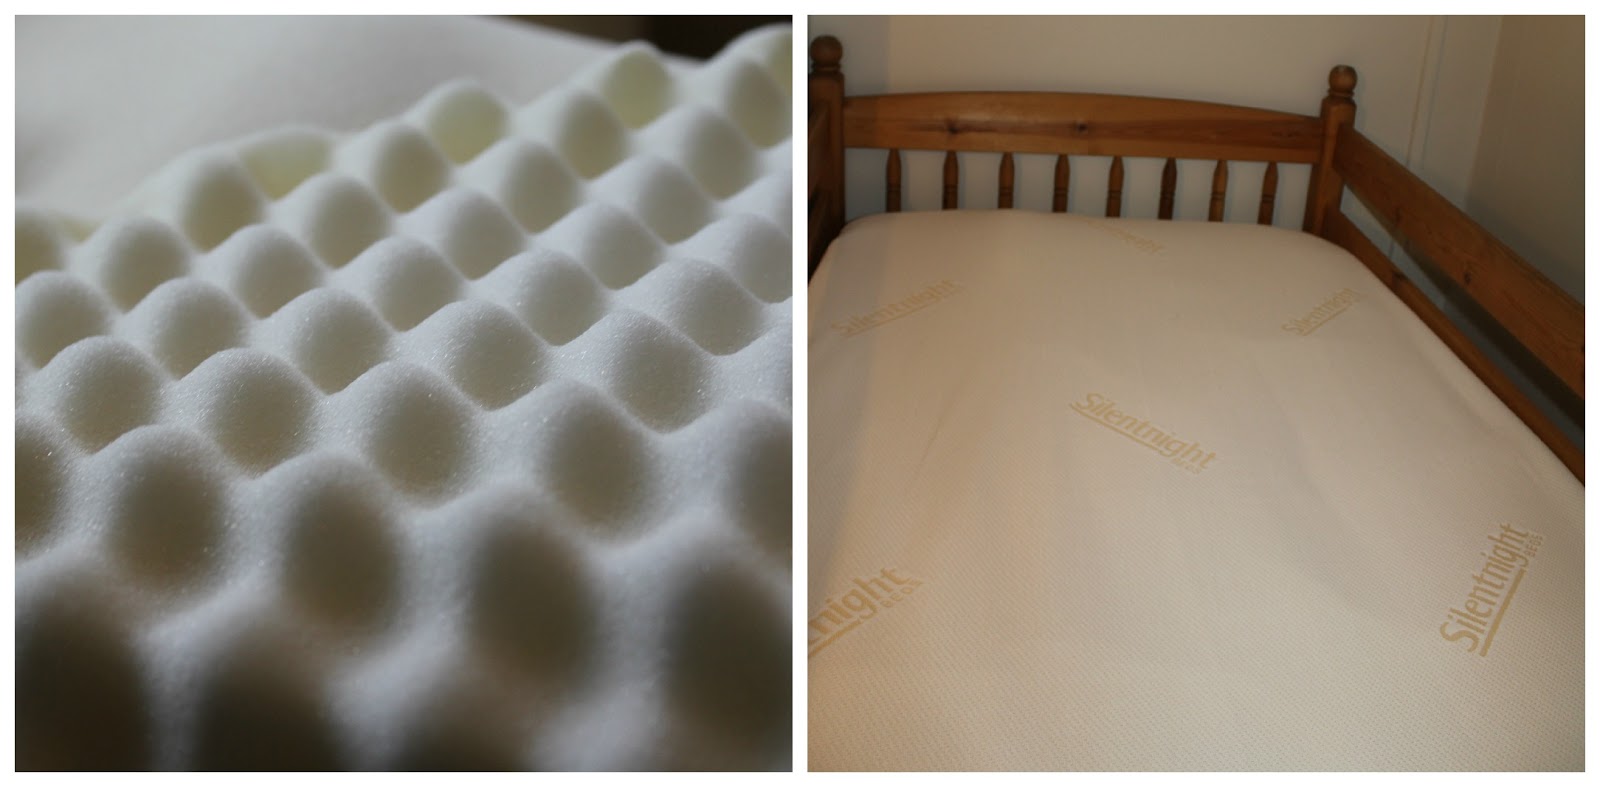 silent night memory foam mattress topper 5cm review